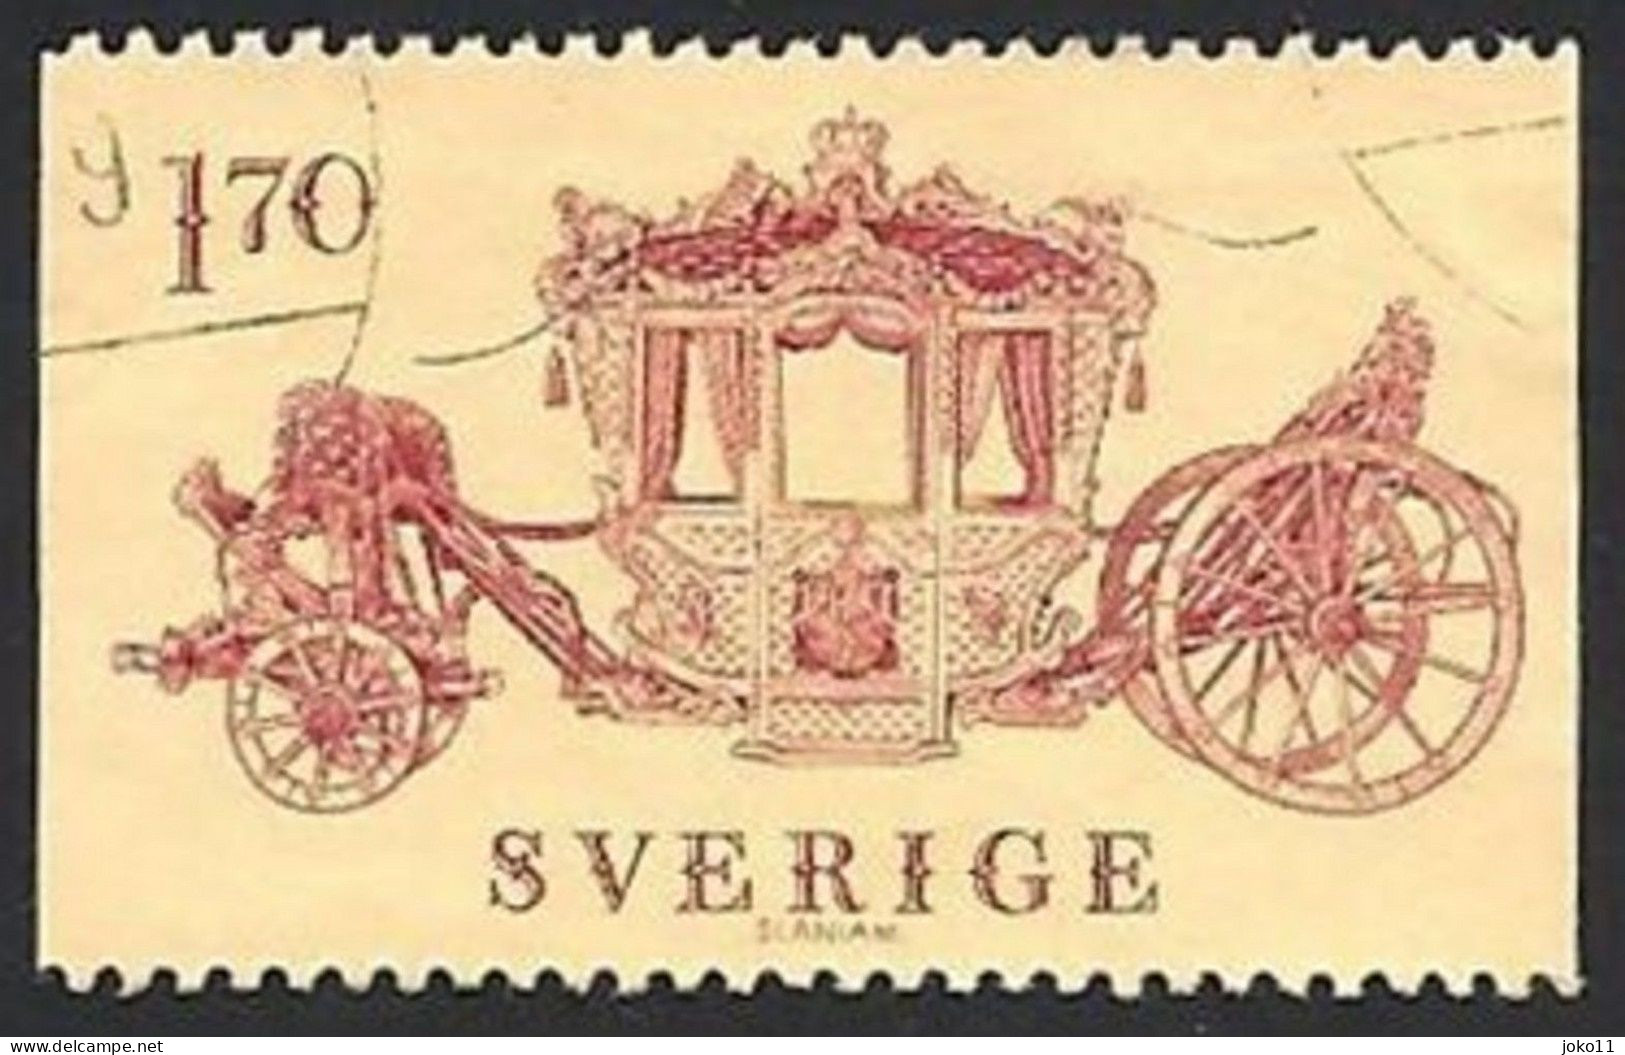 Schweden, 1978, Michel-Nr. 1044, Gestempelt - Used Stamps